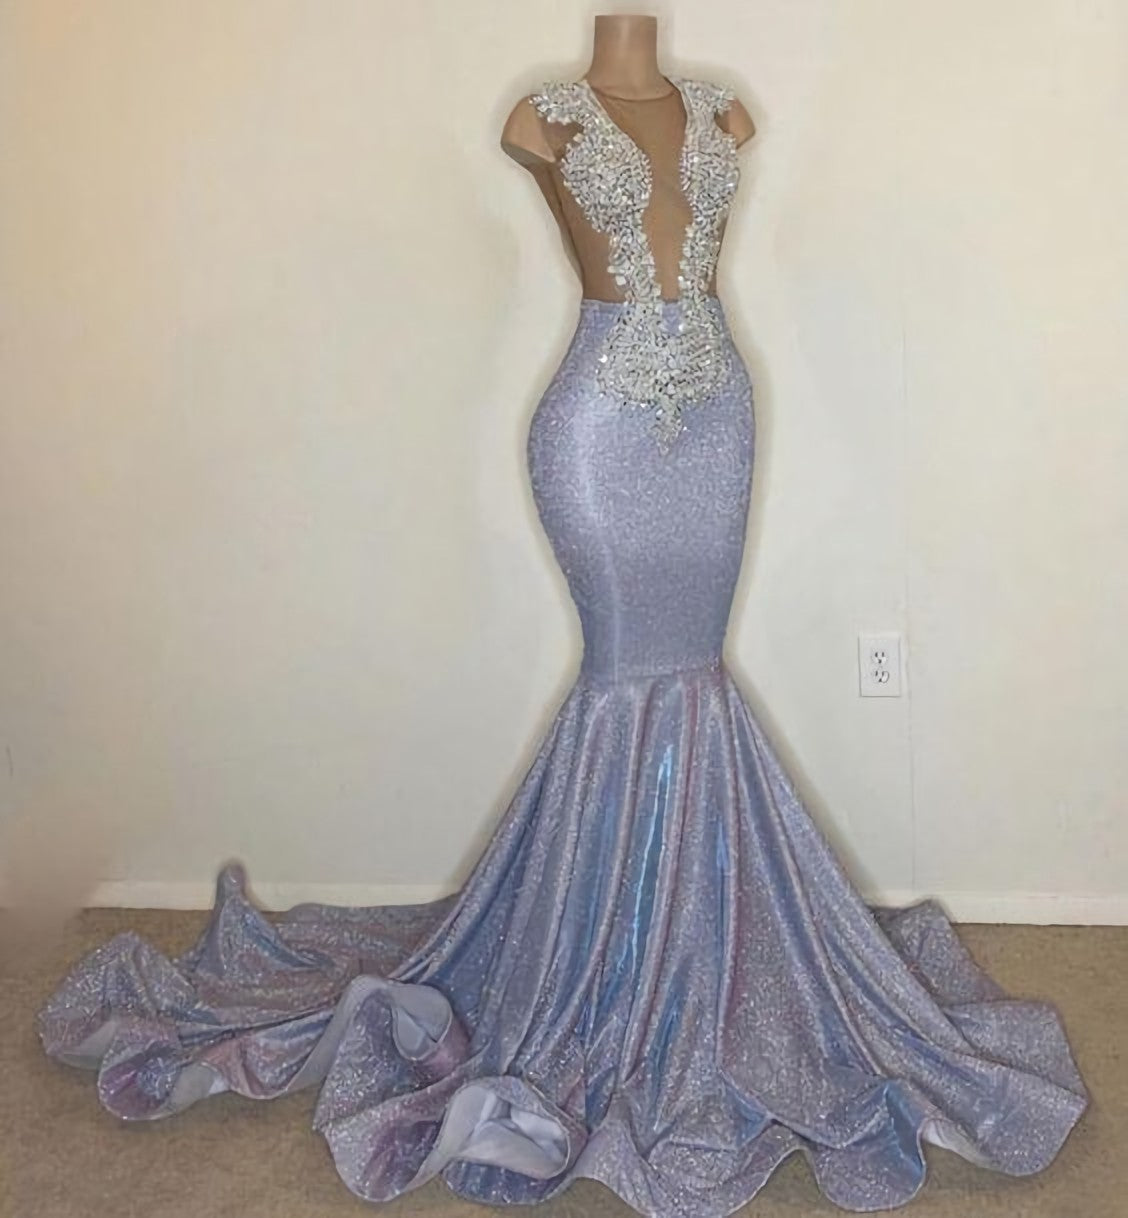 Sequins Prom Dresses, Mermaid Prom Dresses, Sparkly Prom Dresses